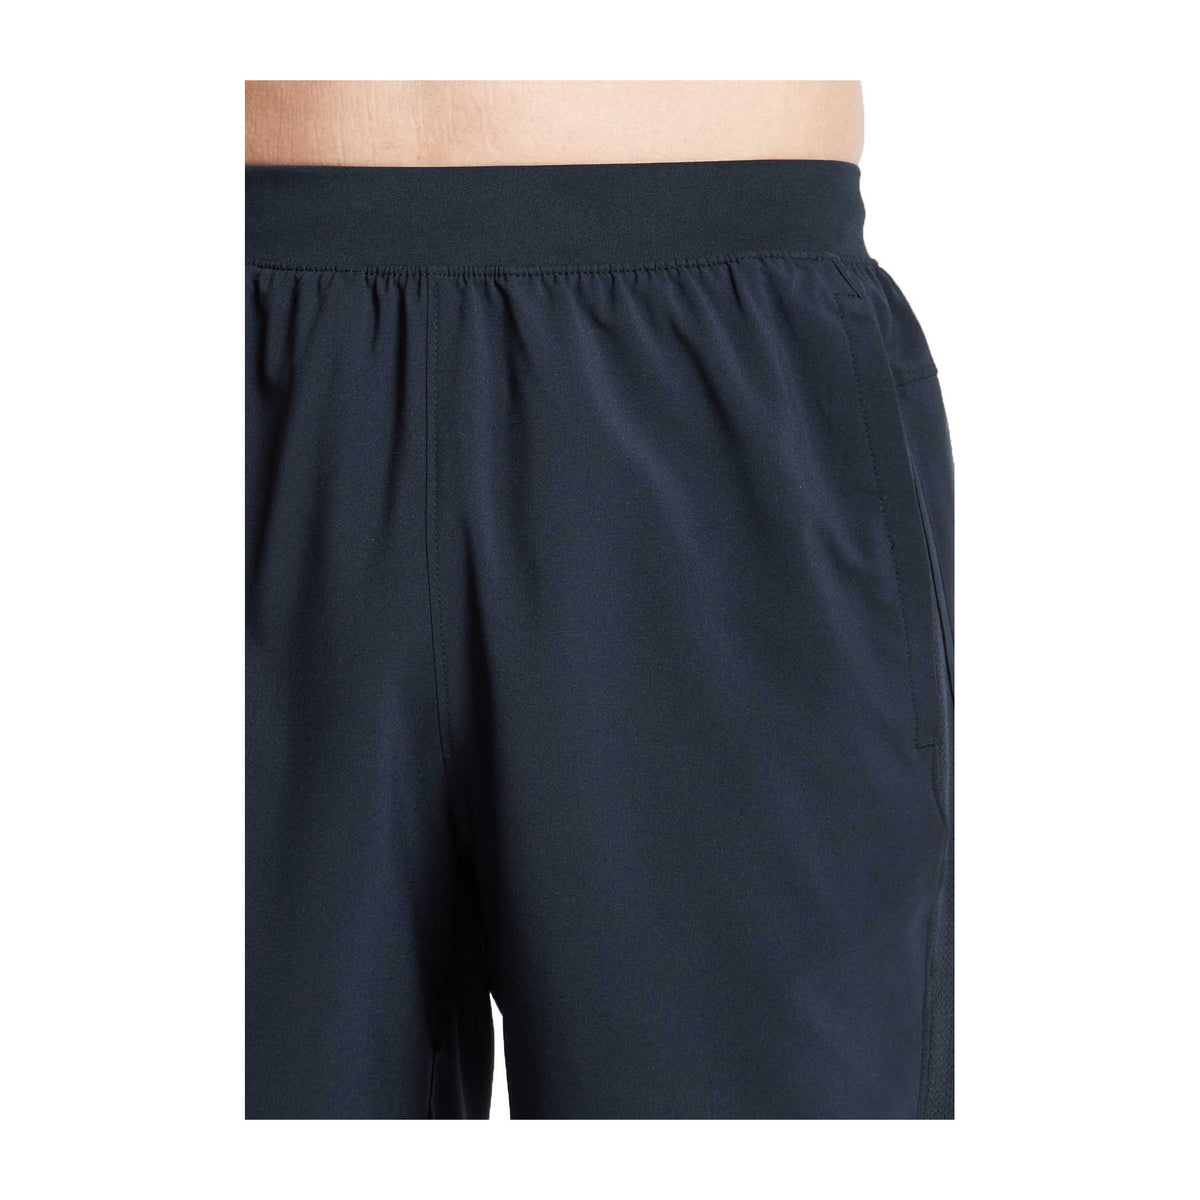 Under Armour Launch 7 pouces shorts homme taille- Black / Reflective